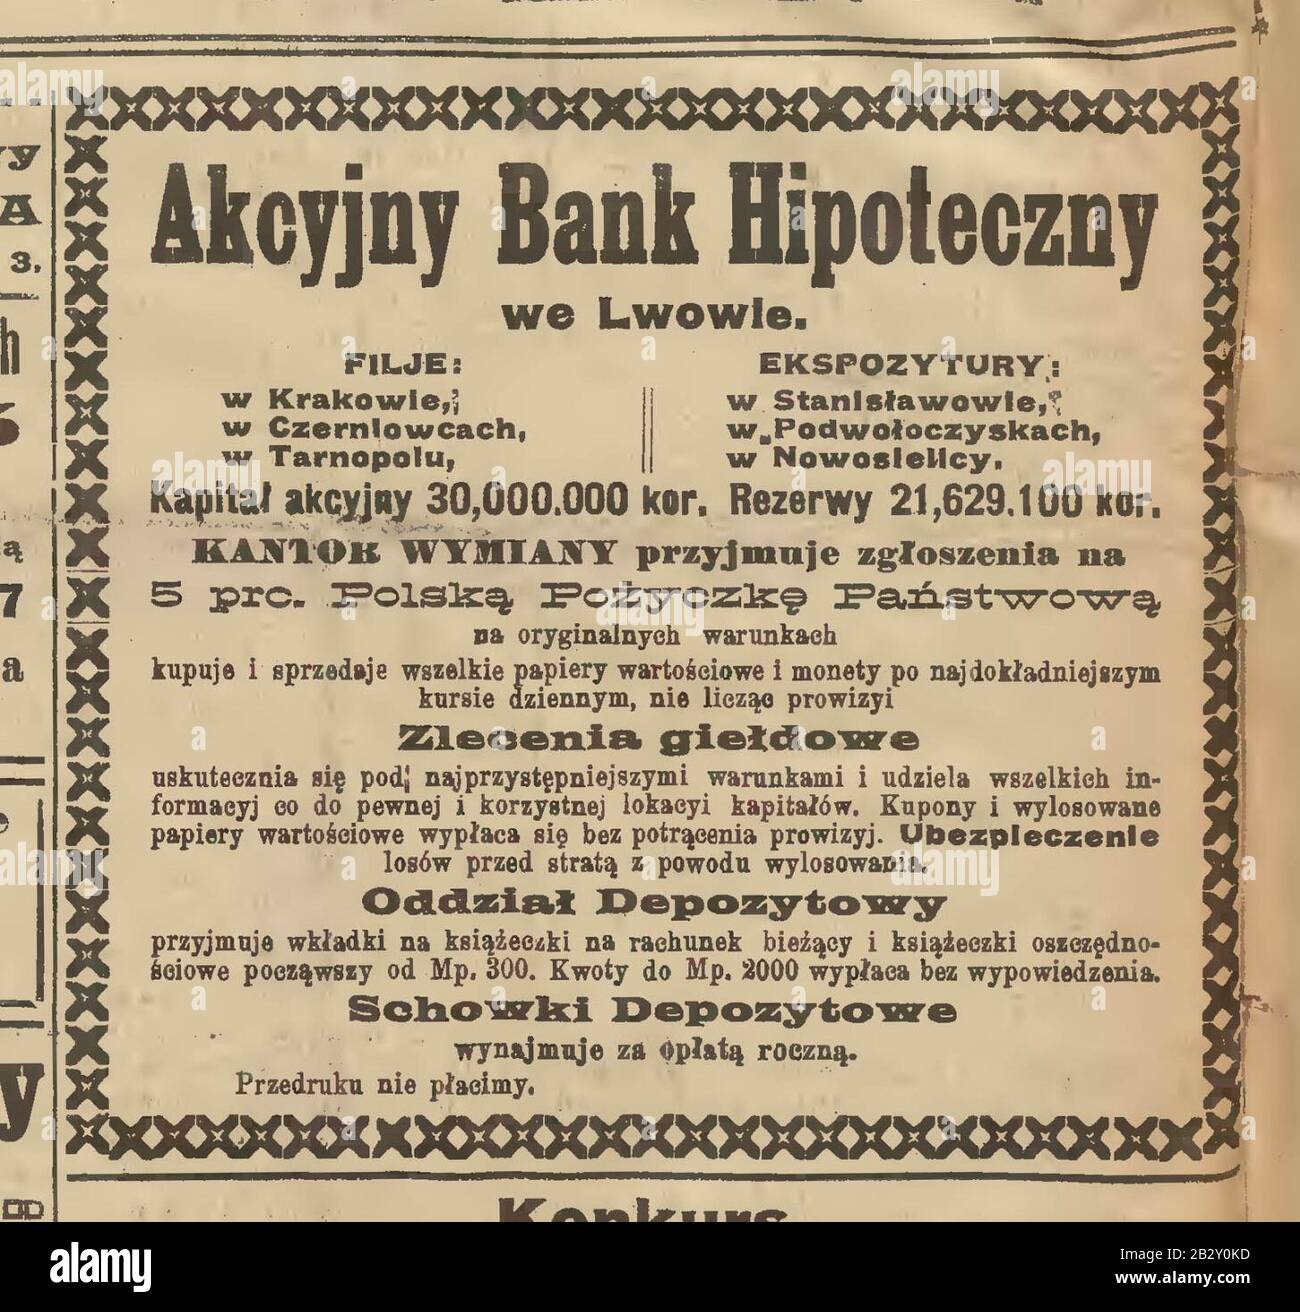 Gazeta Lwowska. - 4 lipca 1920. - № 149. - S. 8 (01). Stock Photo